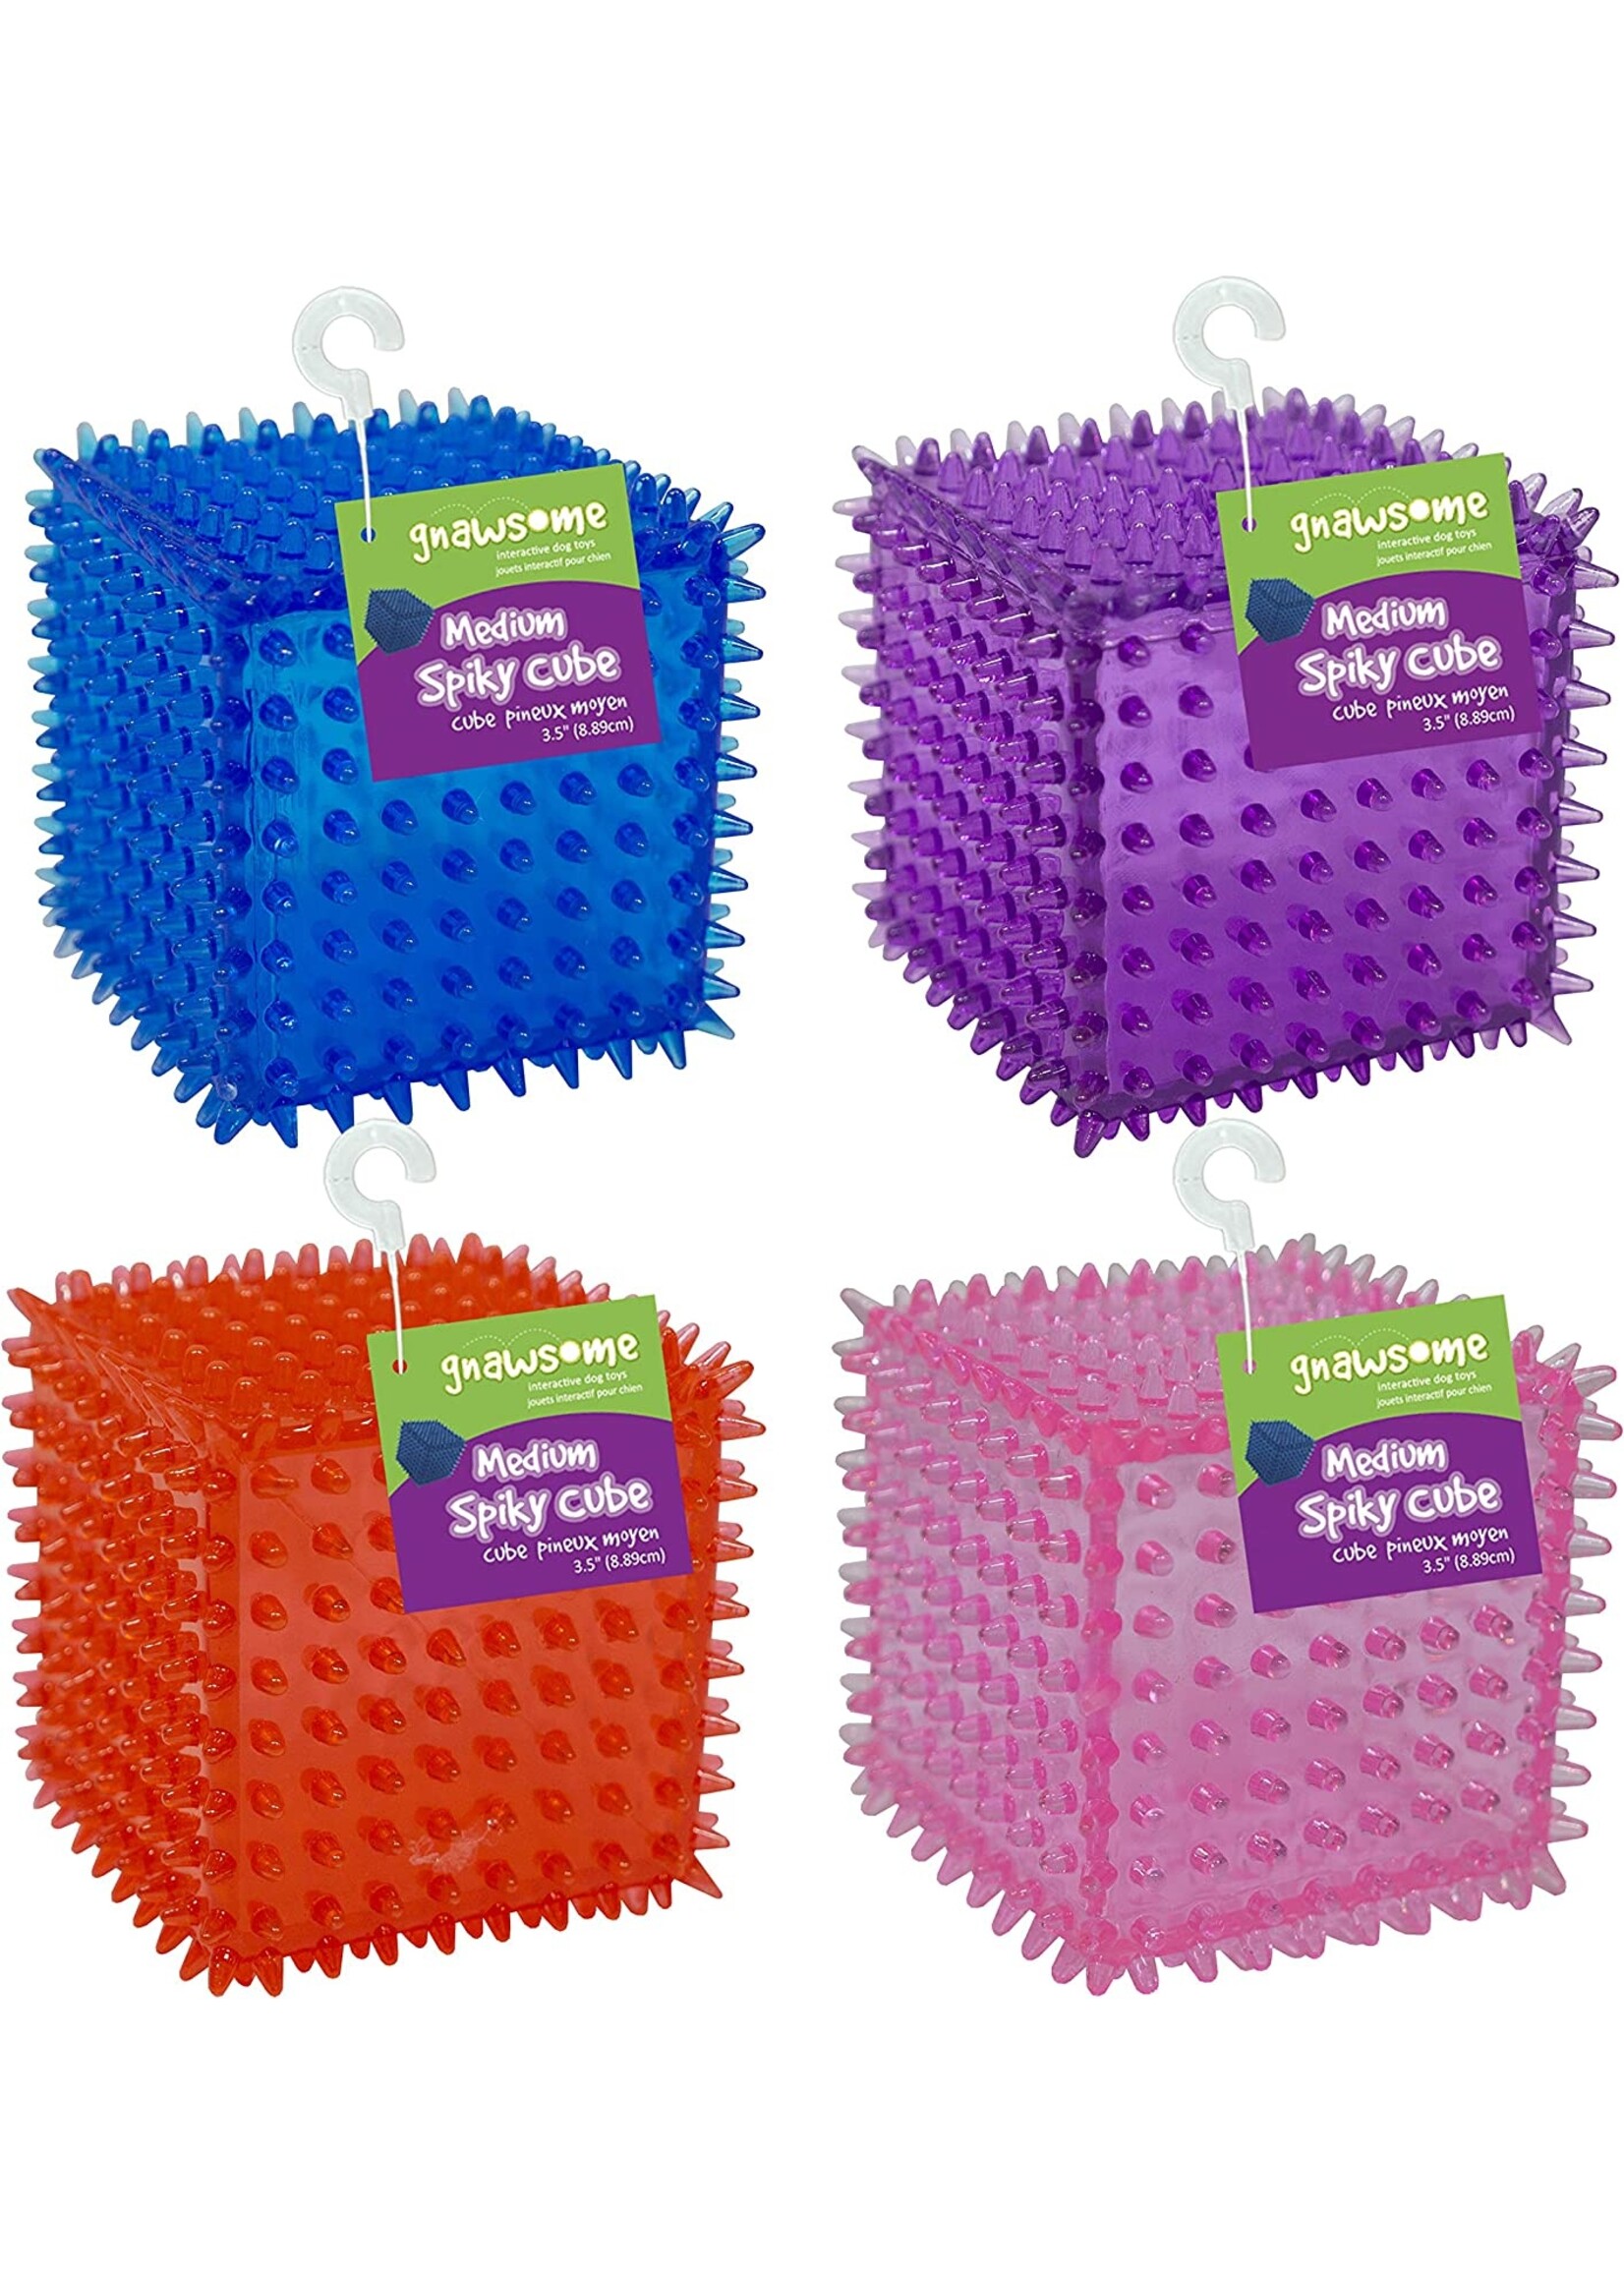 Gnawsome Gnawsome Spiky Cube